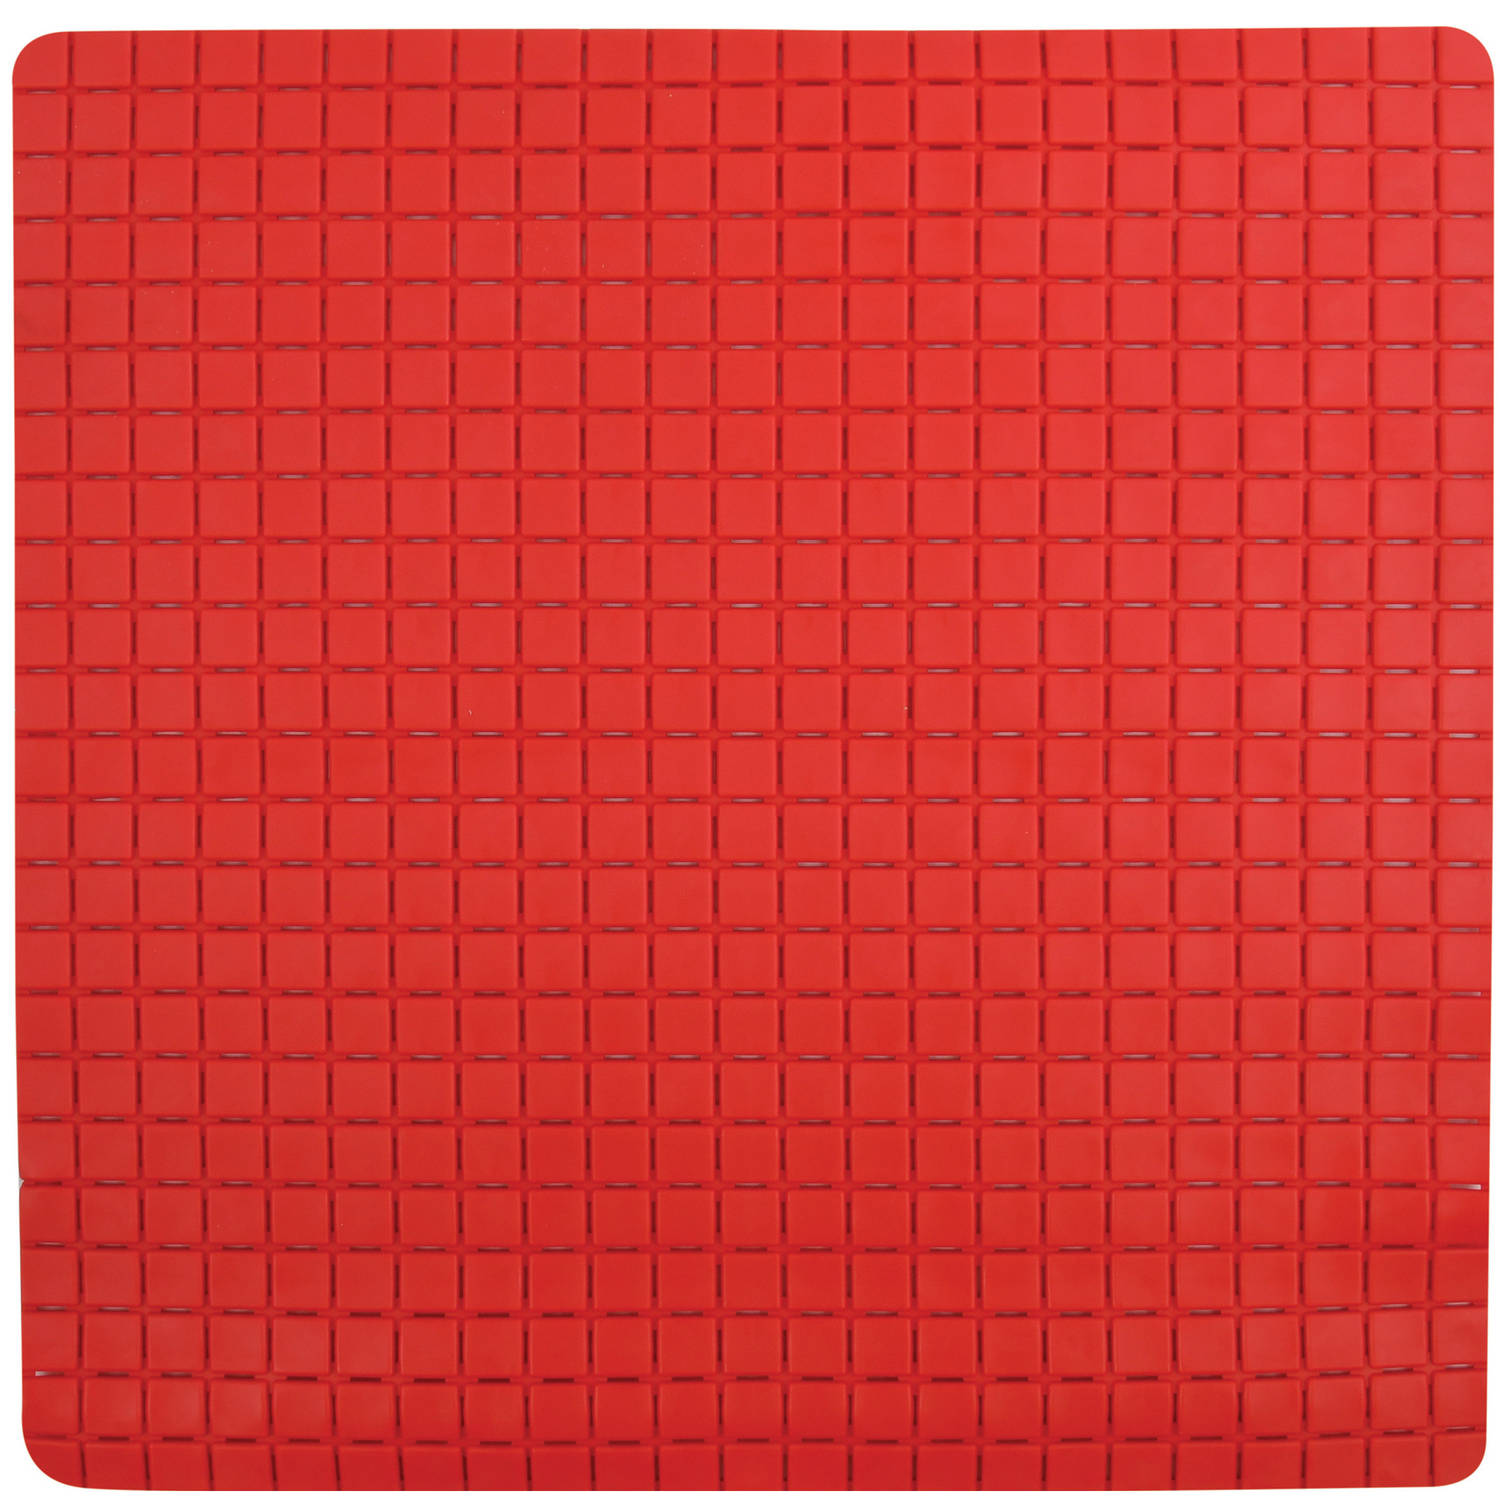 MSV Douche-bad anti-slip mat badkamer rubber rood 54 x 54 cm Badmatjes